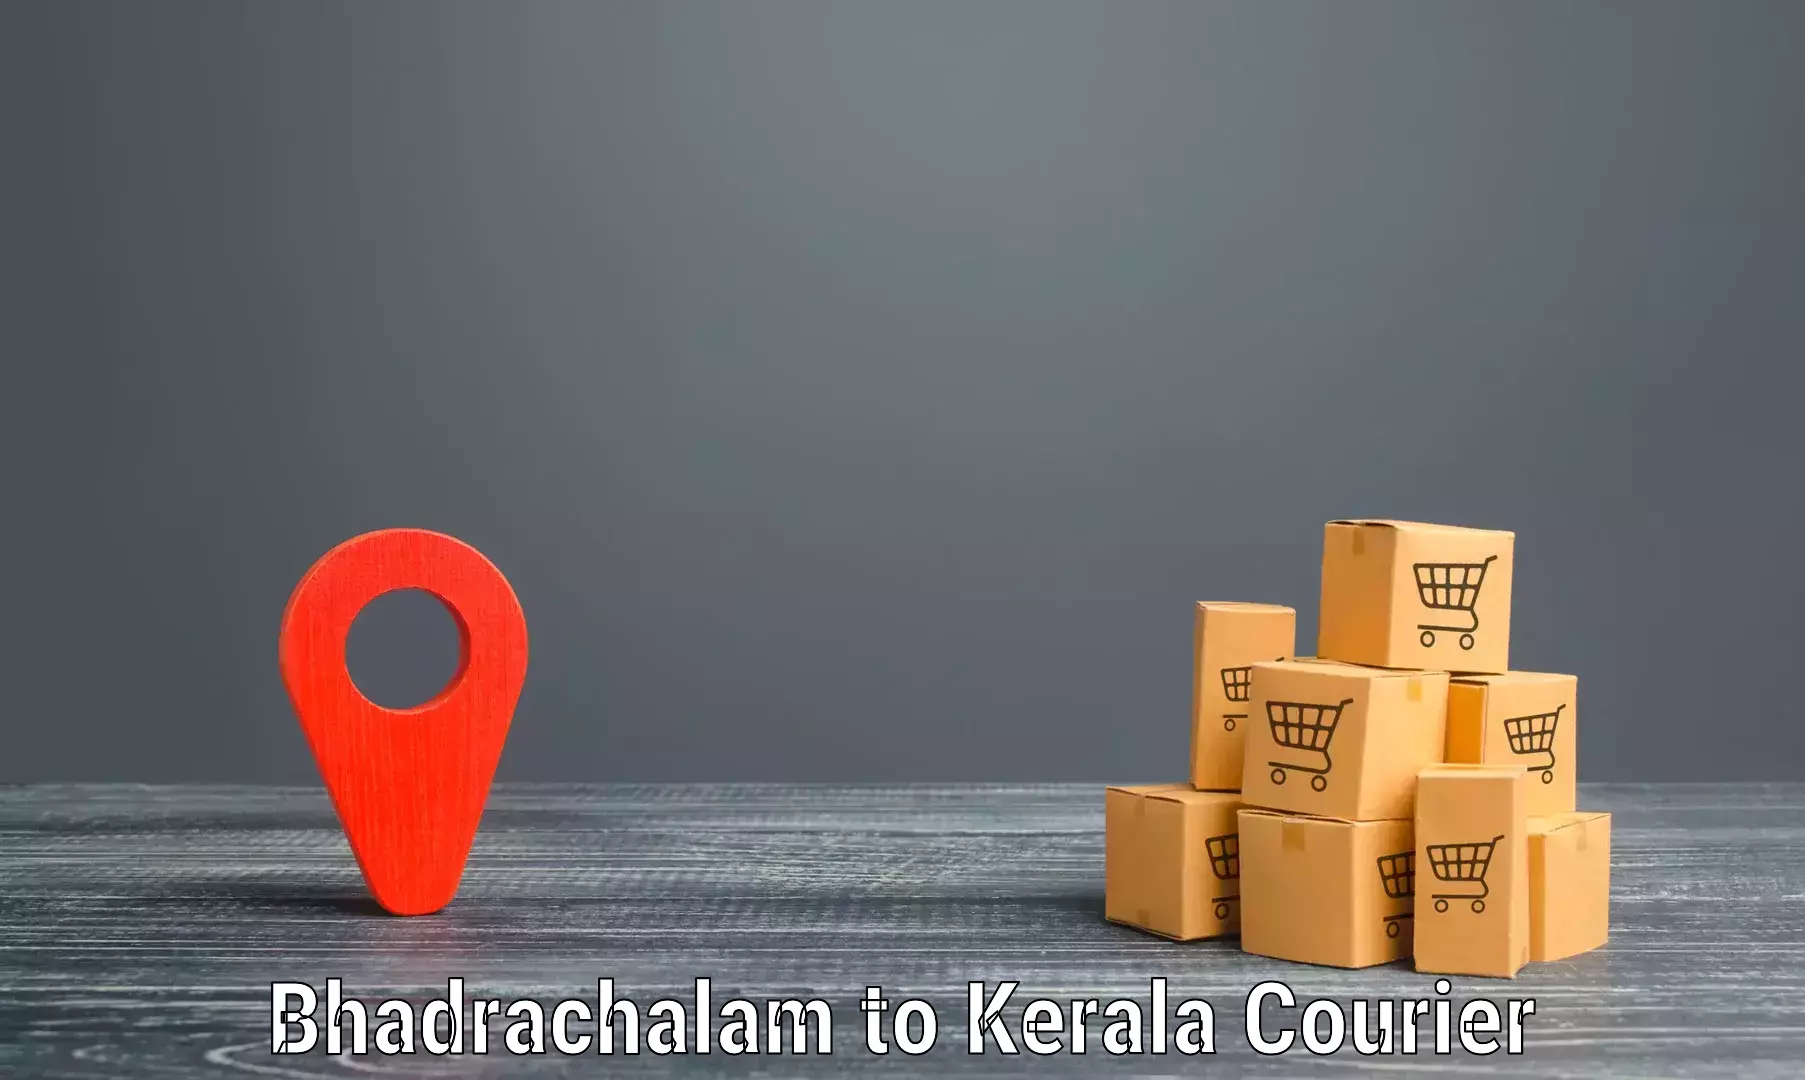 Courier service partnerships Bhadrachalam to Cochin Port Kochi